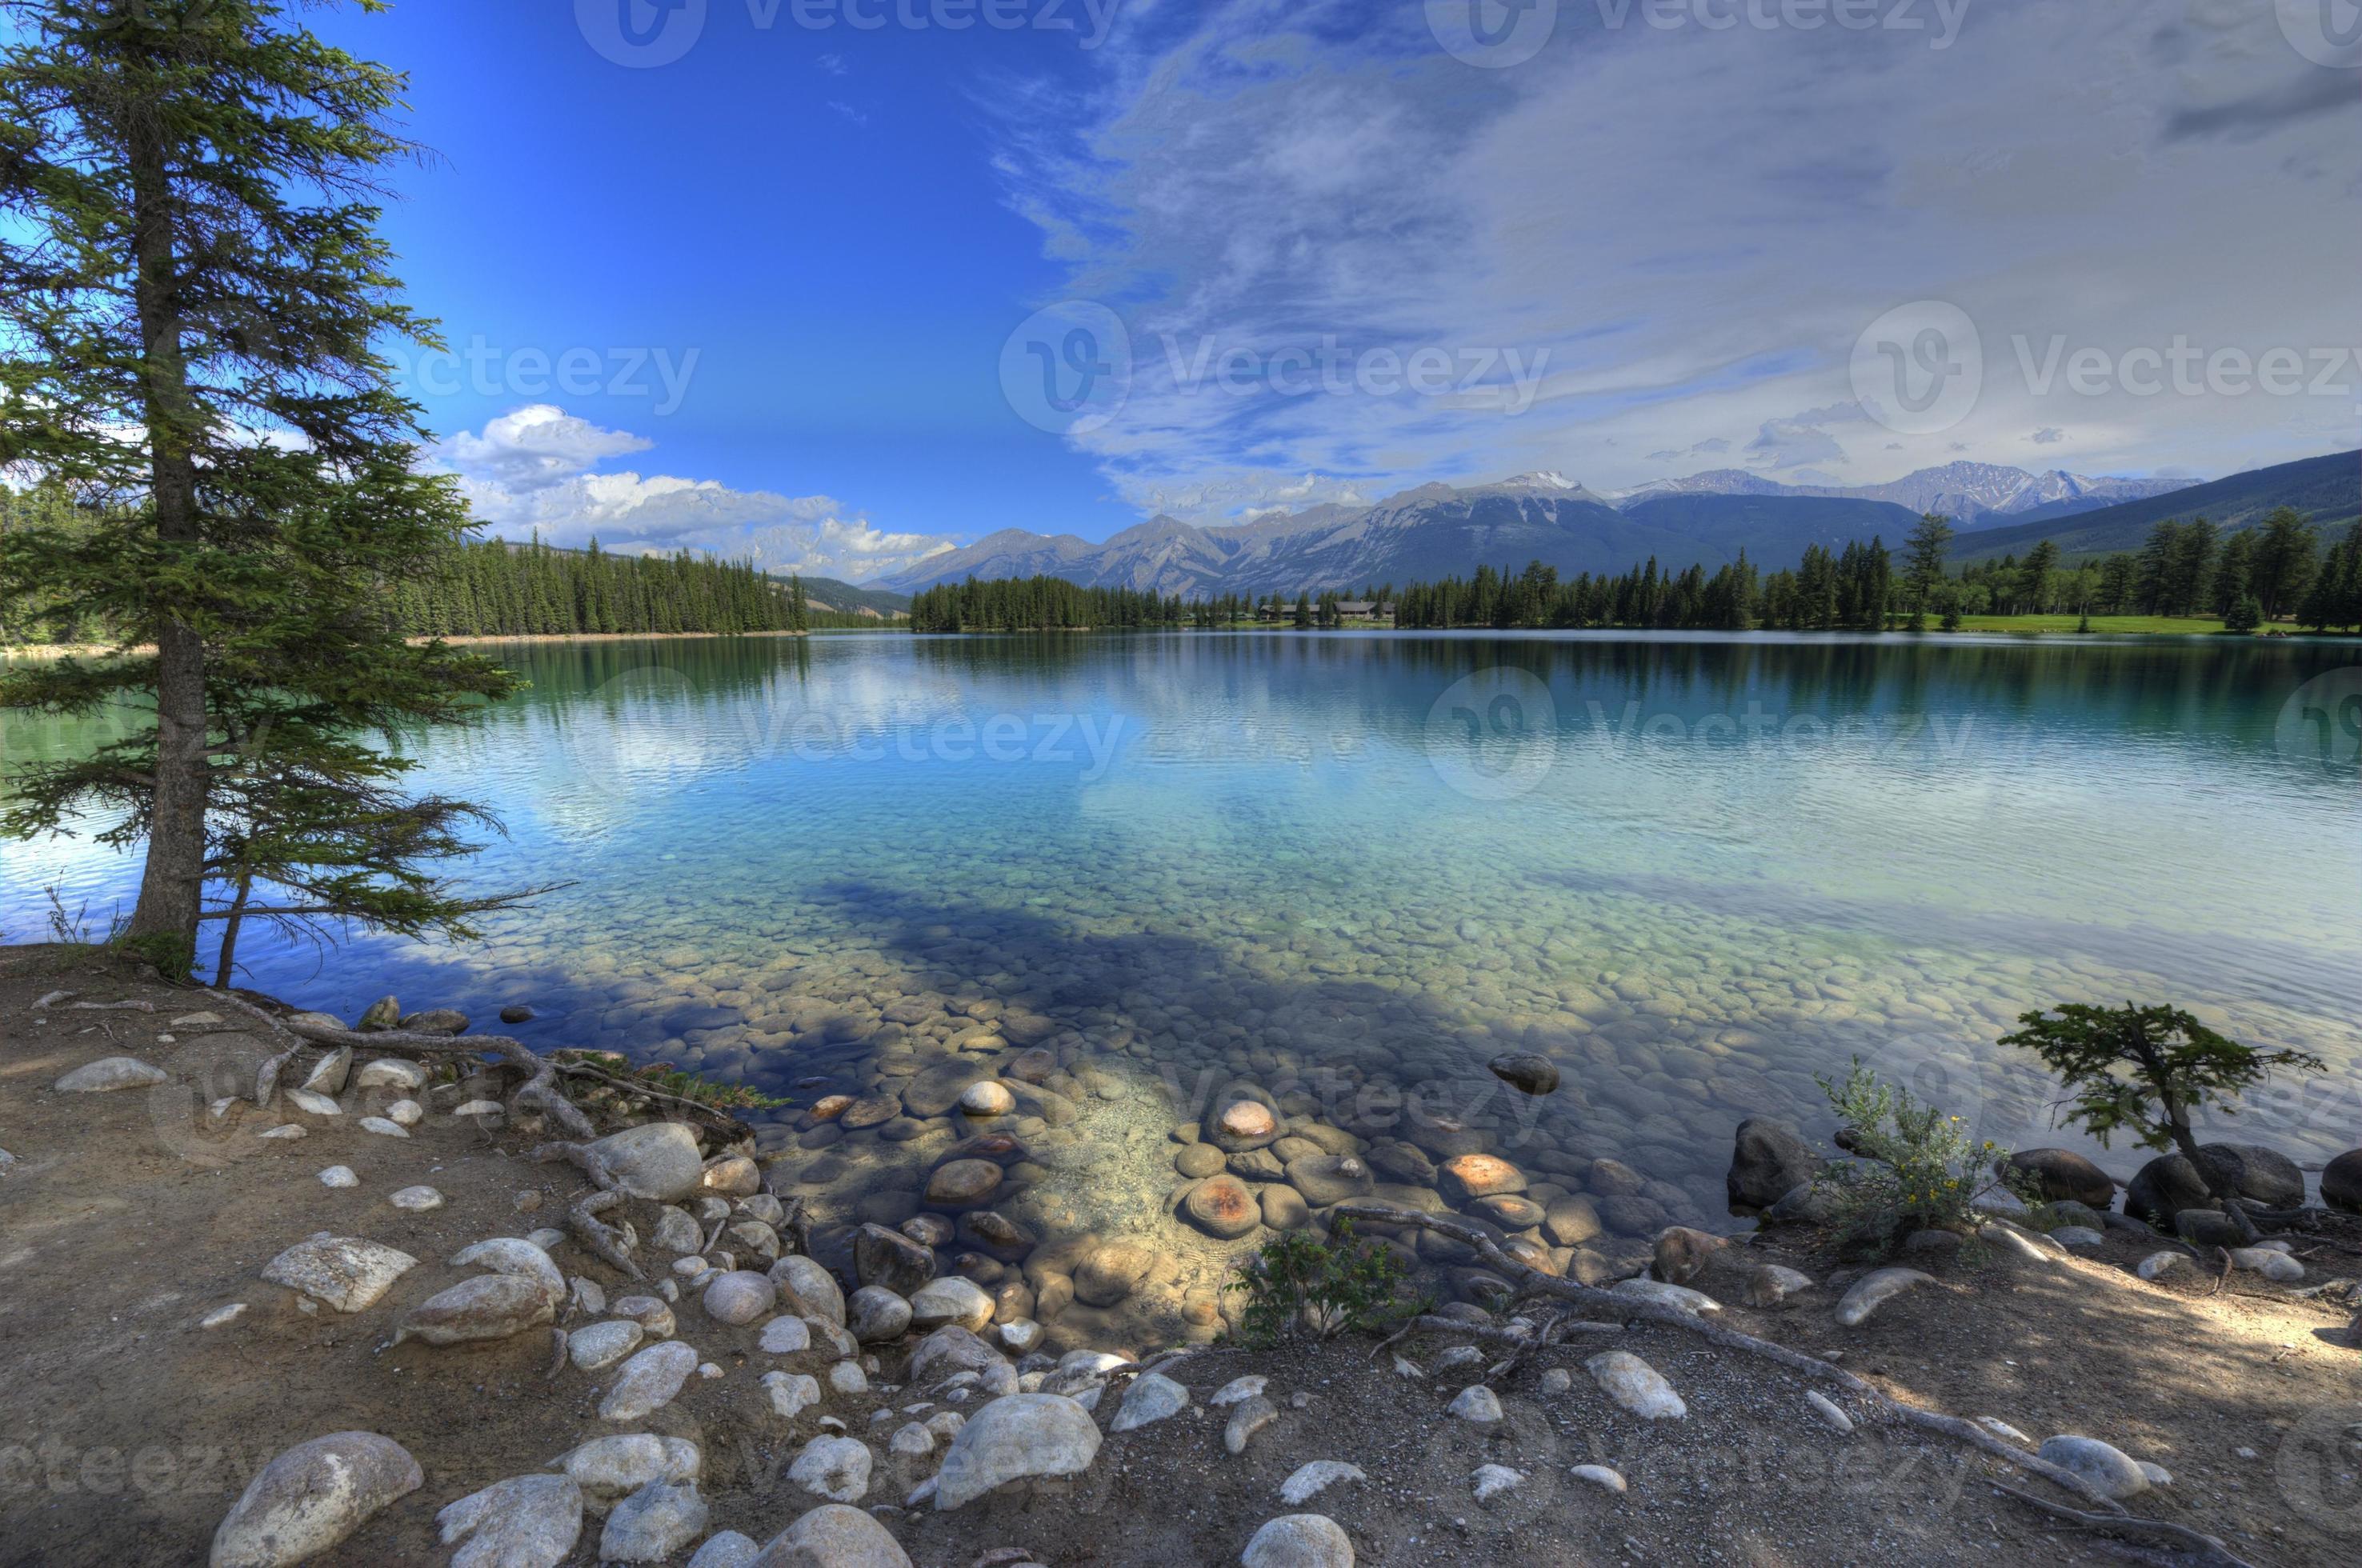 Rocky Mountains, British Columbia, Canada. 786144 Stock Photo at Vecteezy